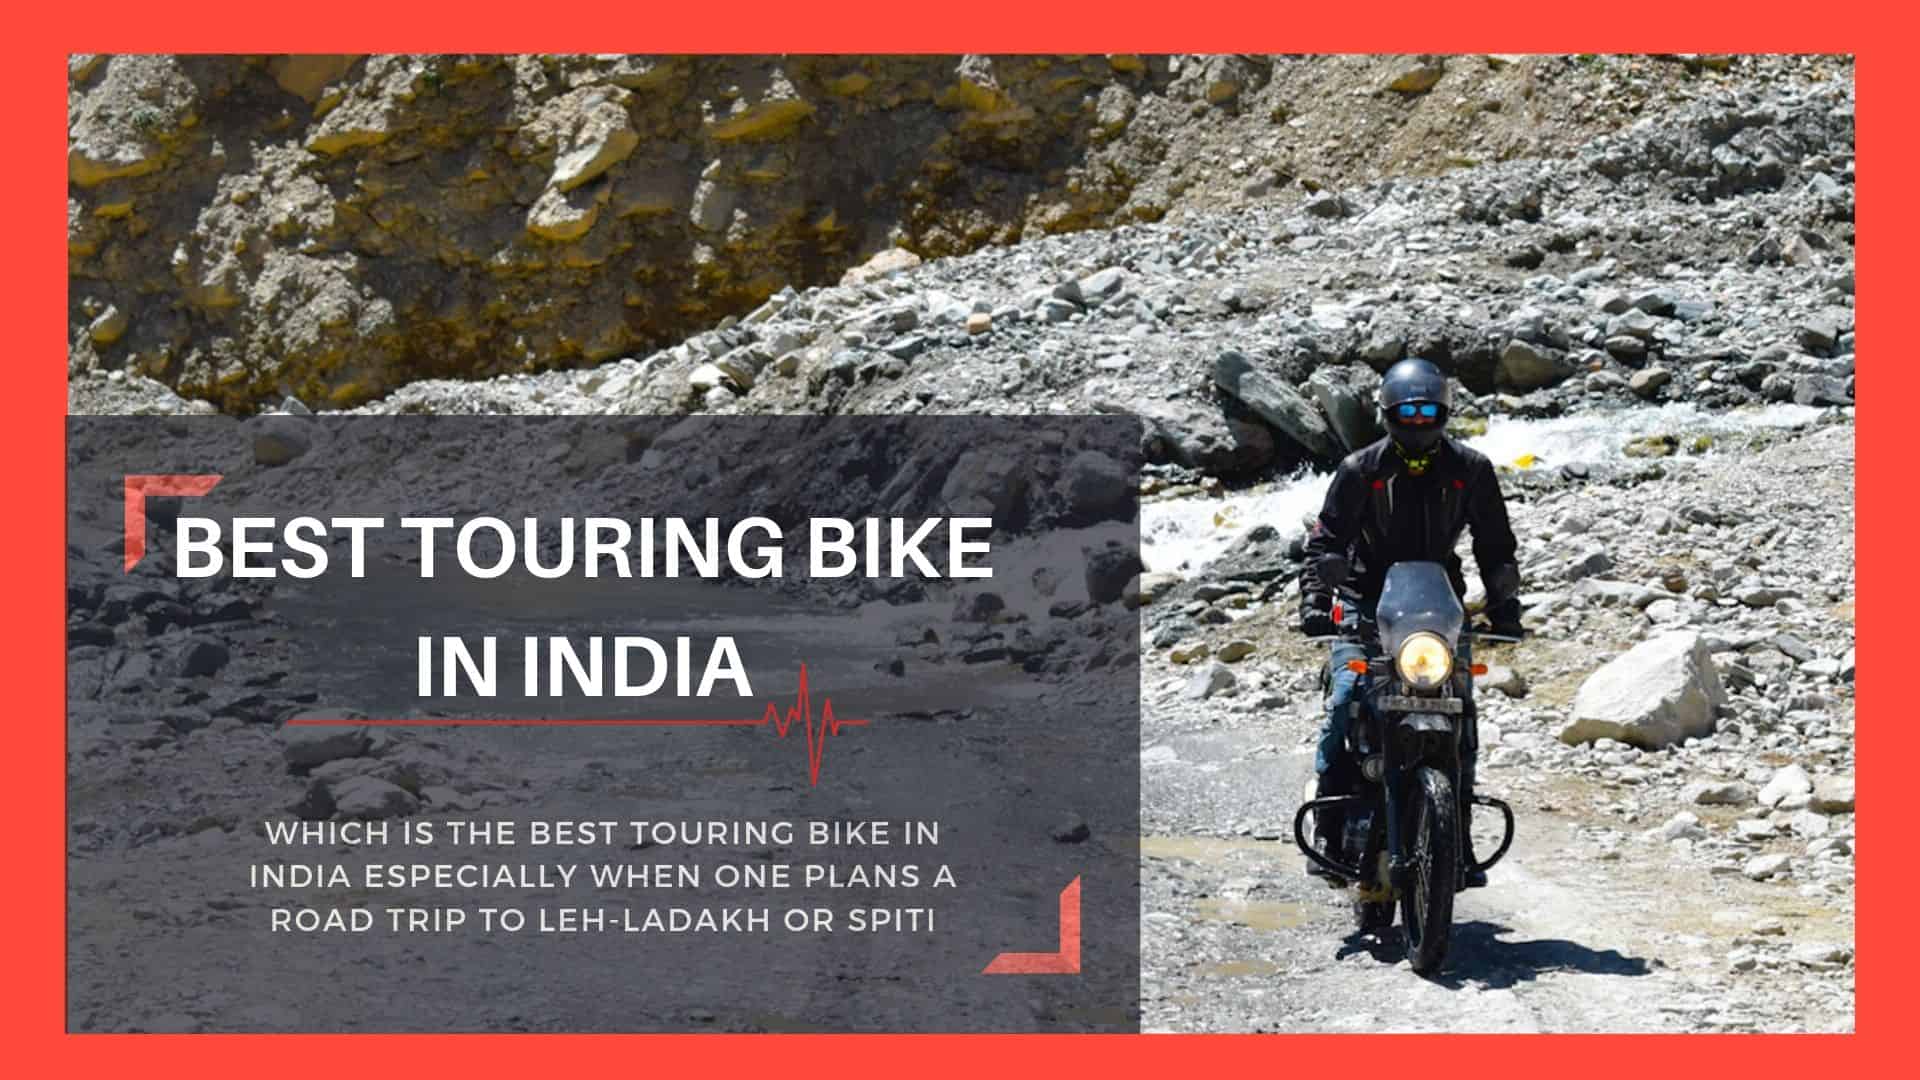 himachal bike rideing a man in baralacha  and write best touring bike in india 